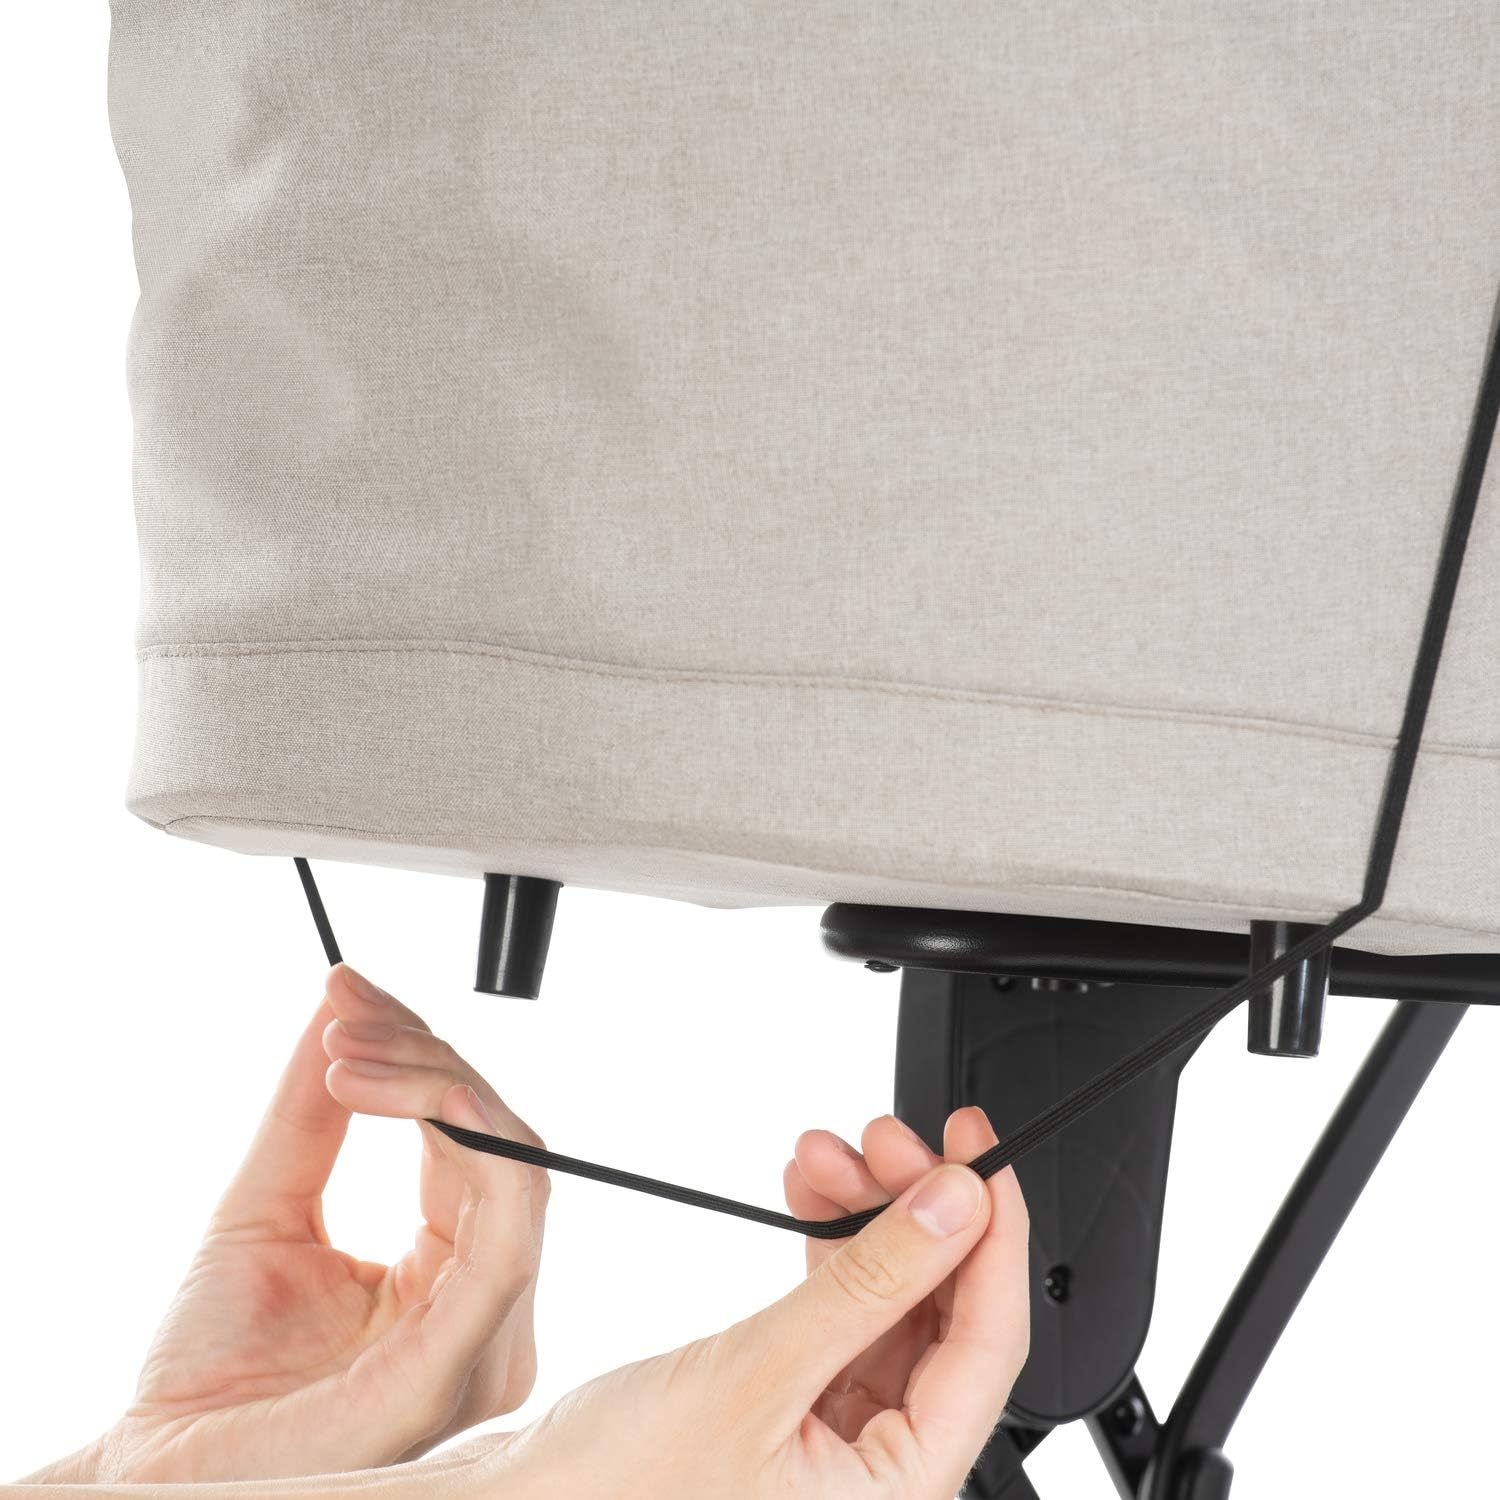 Hauck - stroller accessories Sunshade - Grey